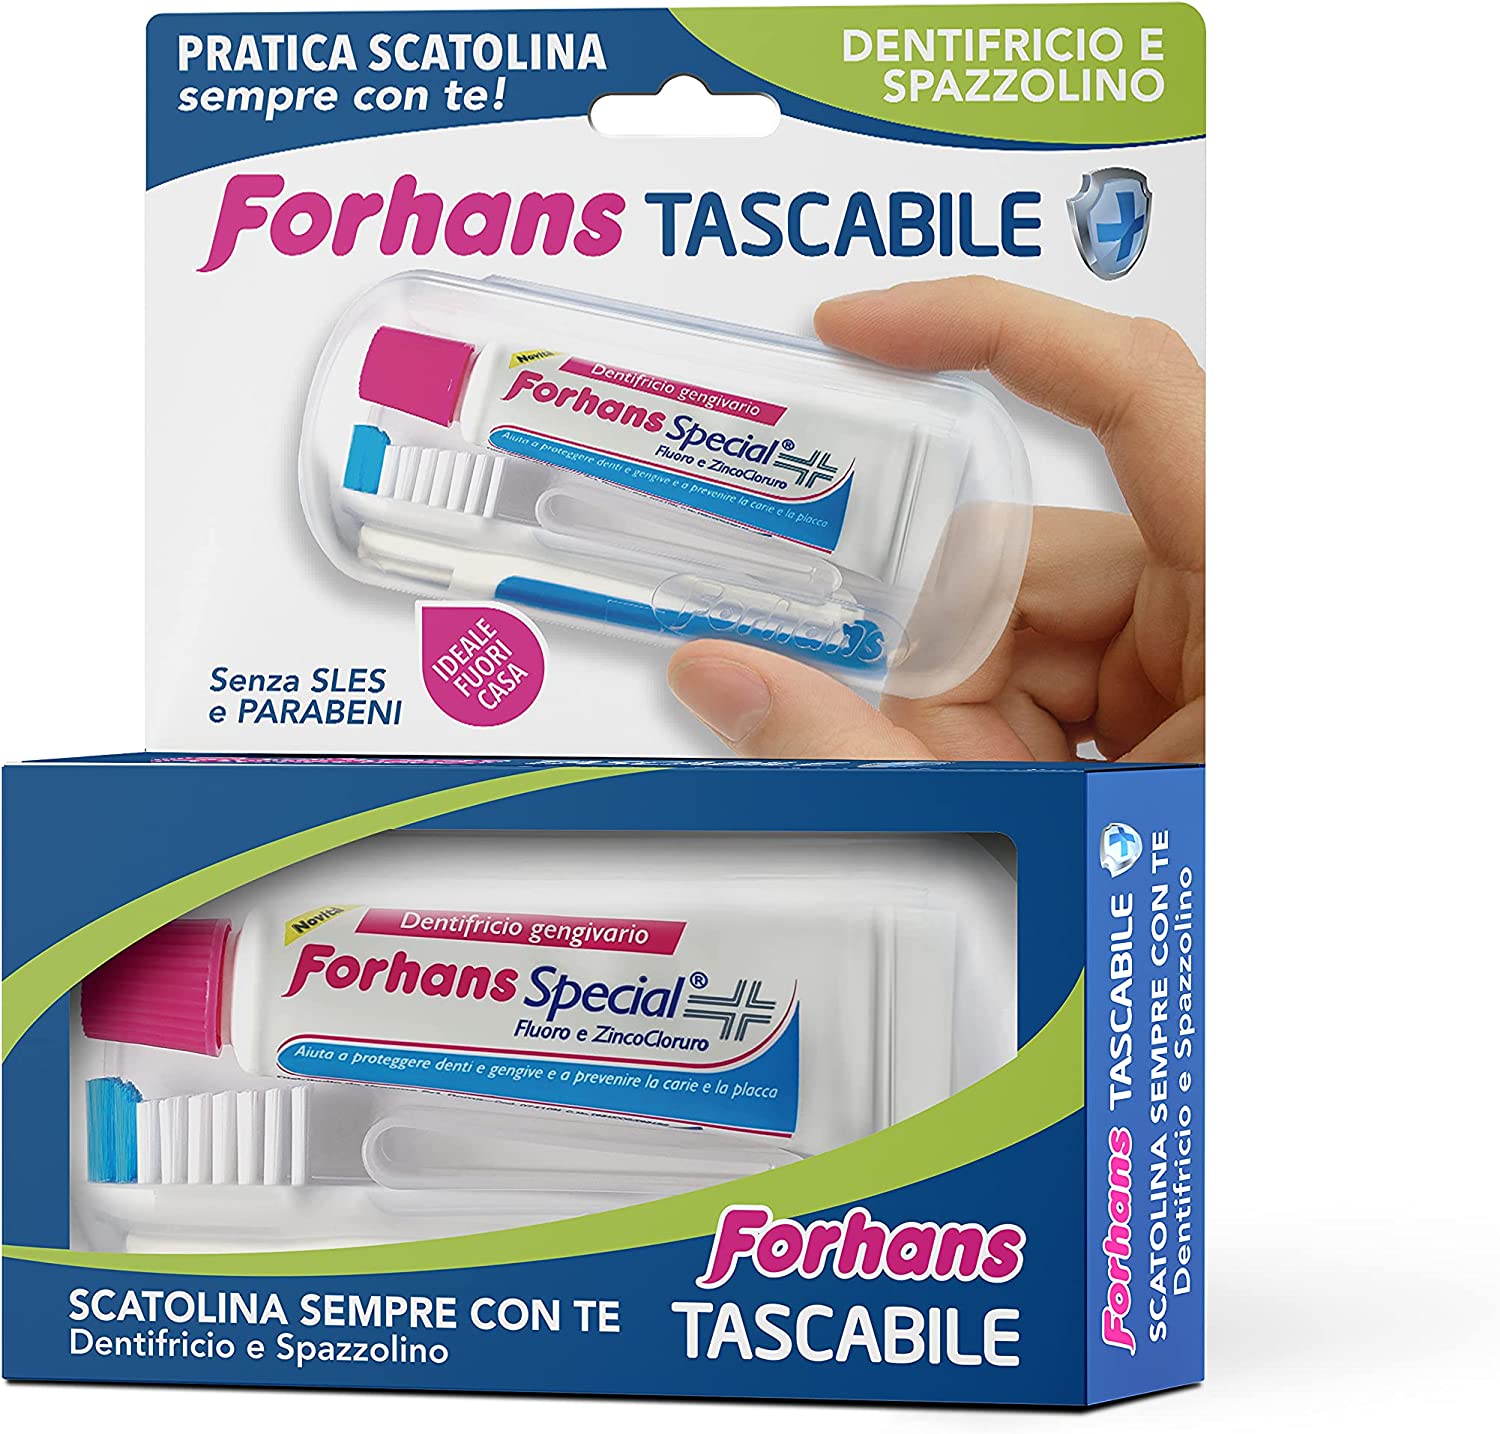 Image of Dentifricio + Spazzolino Forhans Special Tascabile